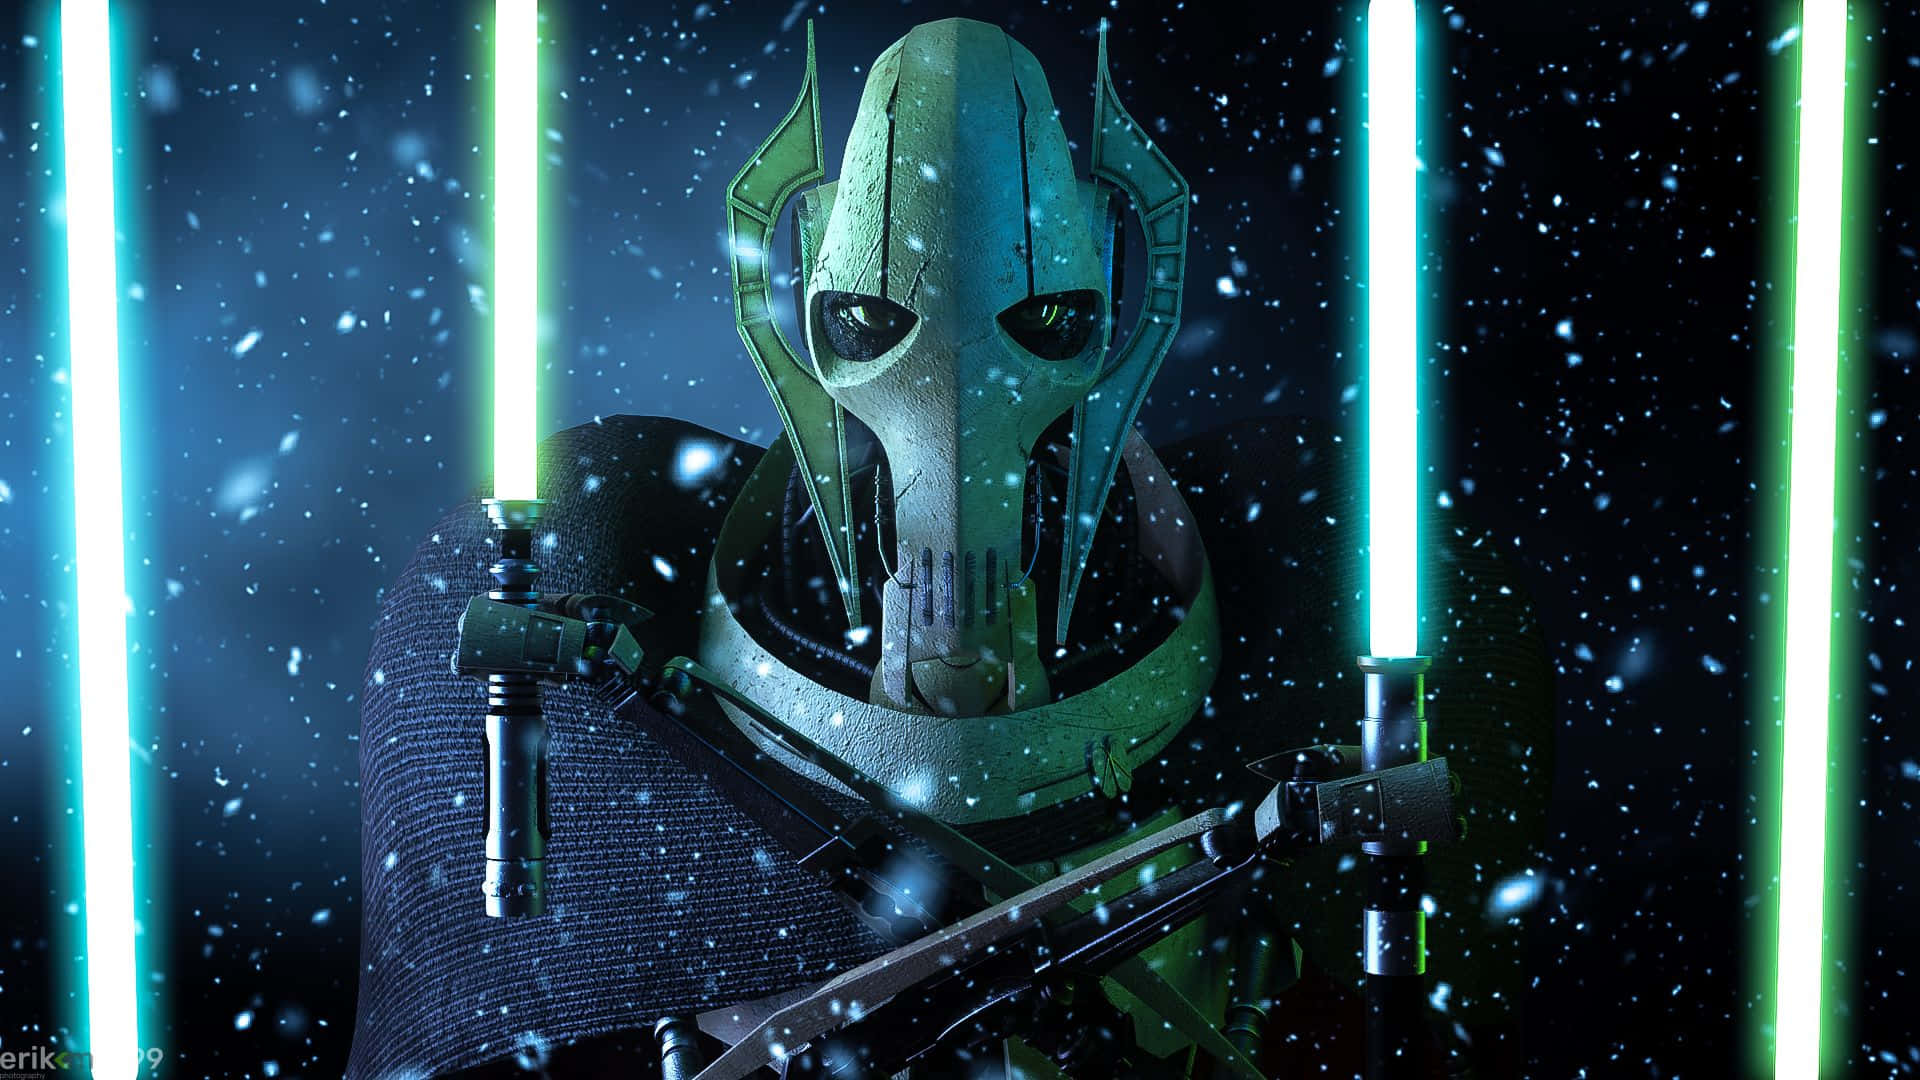 General Grievous, The Ultimate Star Wars Villain